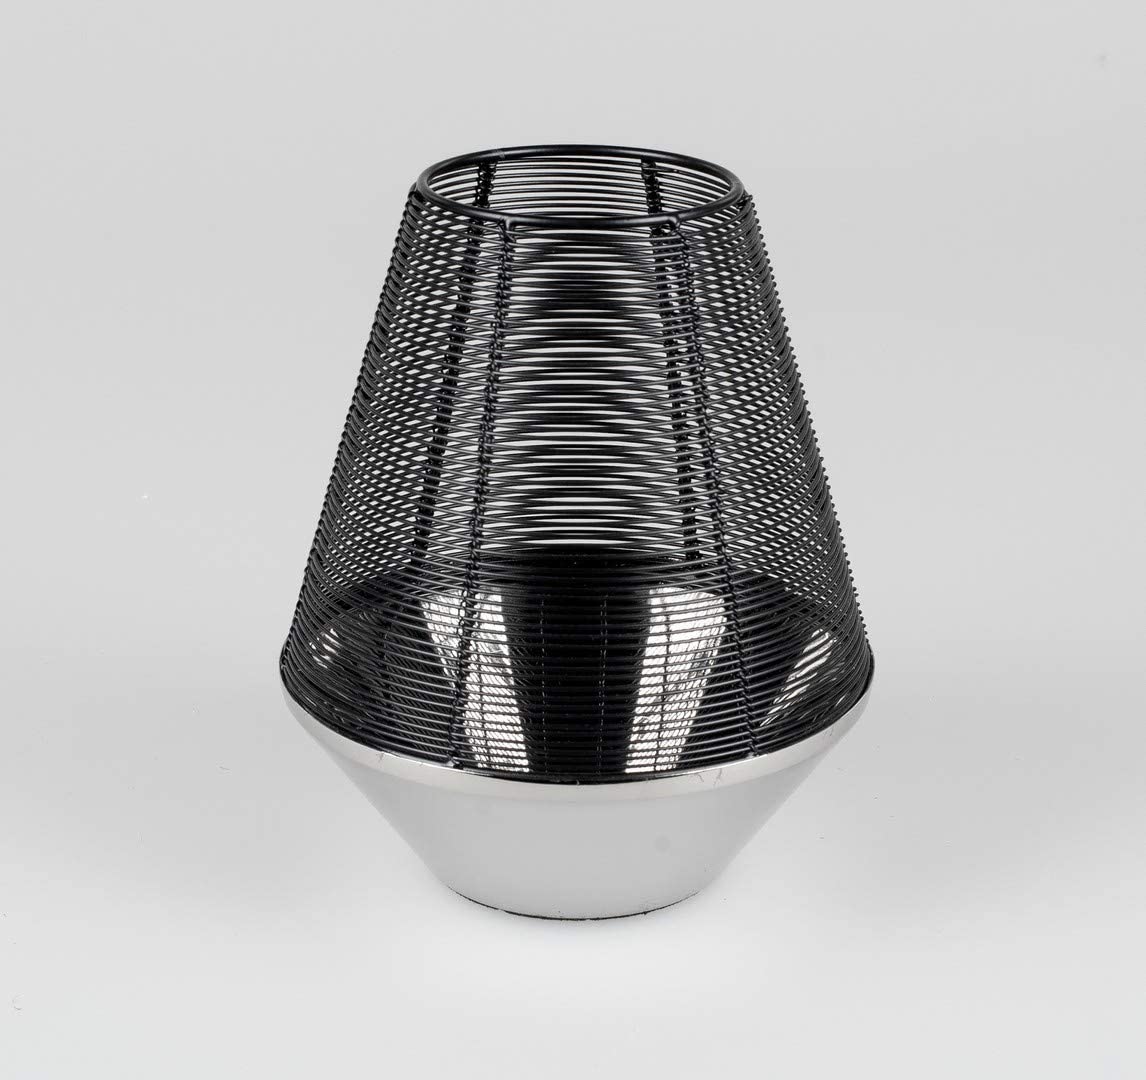 Itrr Lantern Nickel-Black, Approx. 16 X 22 Cm.